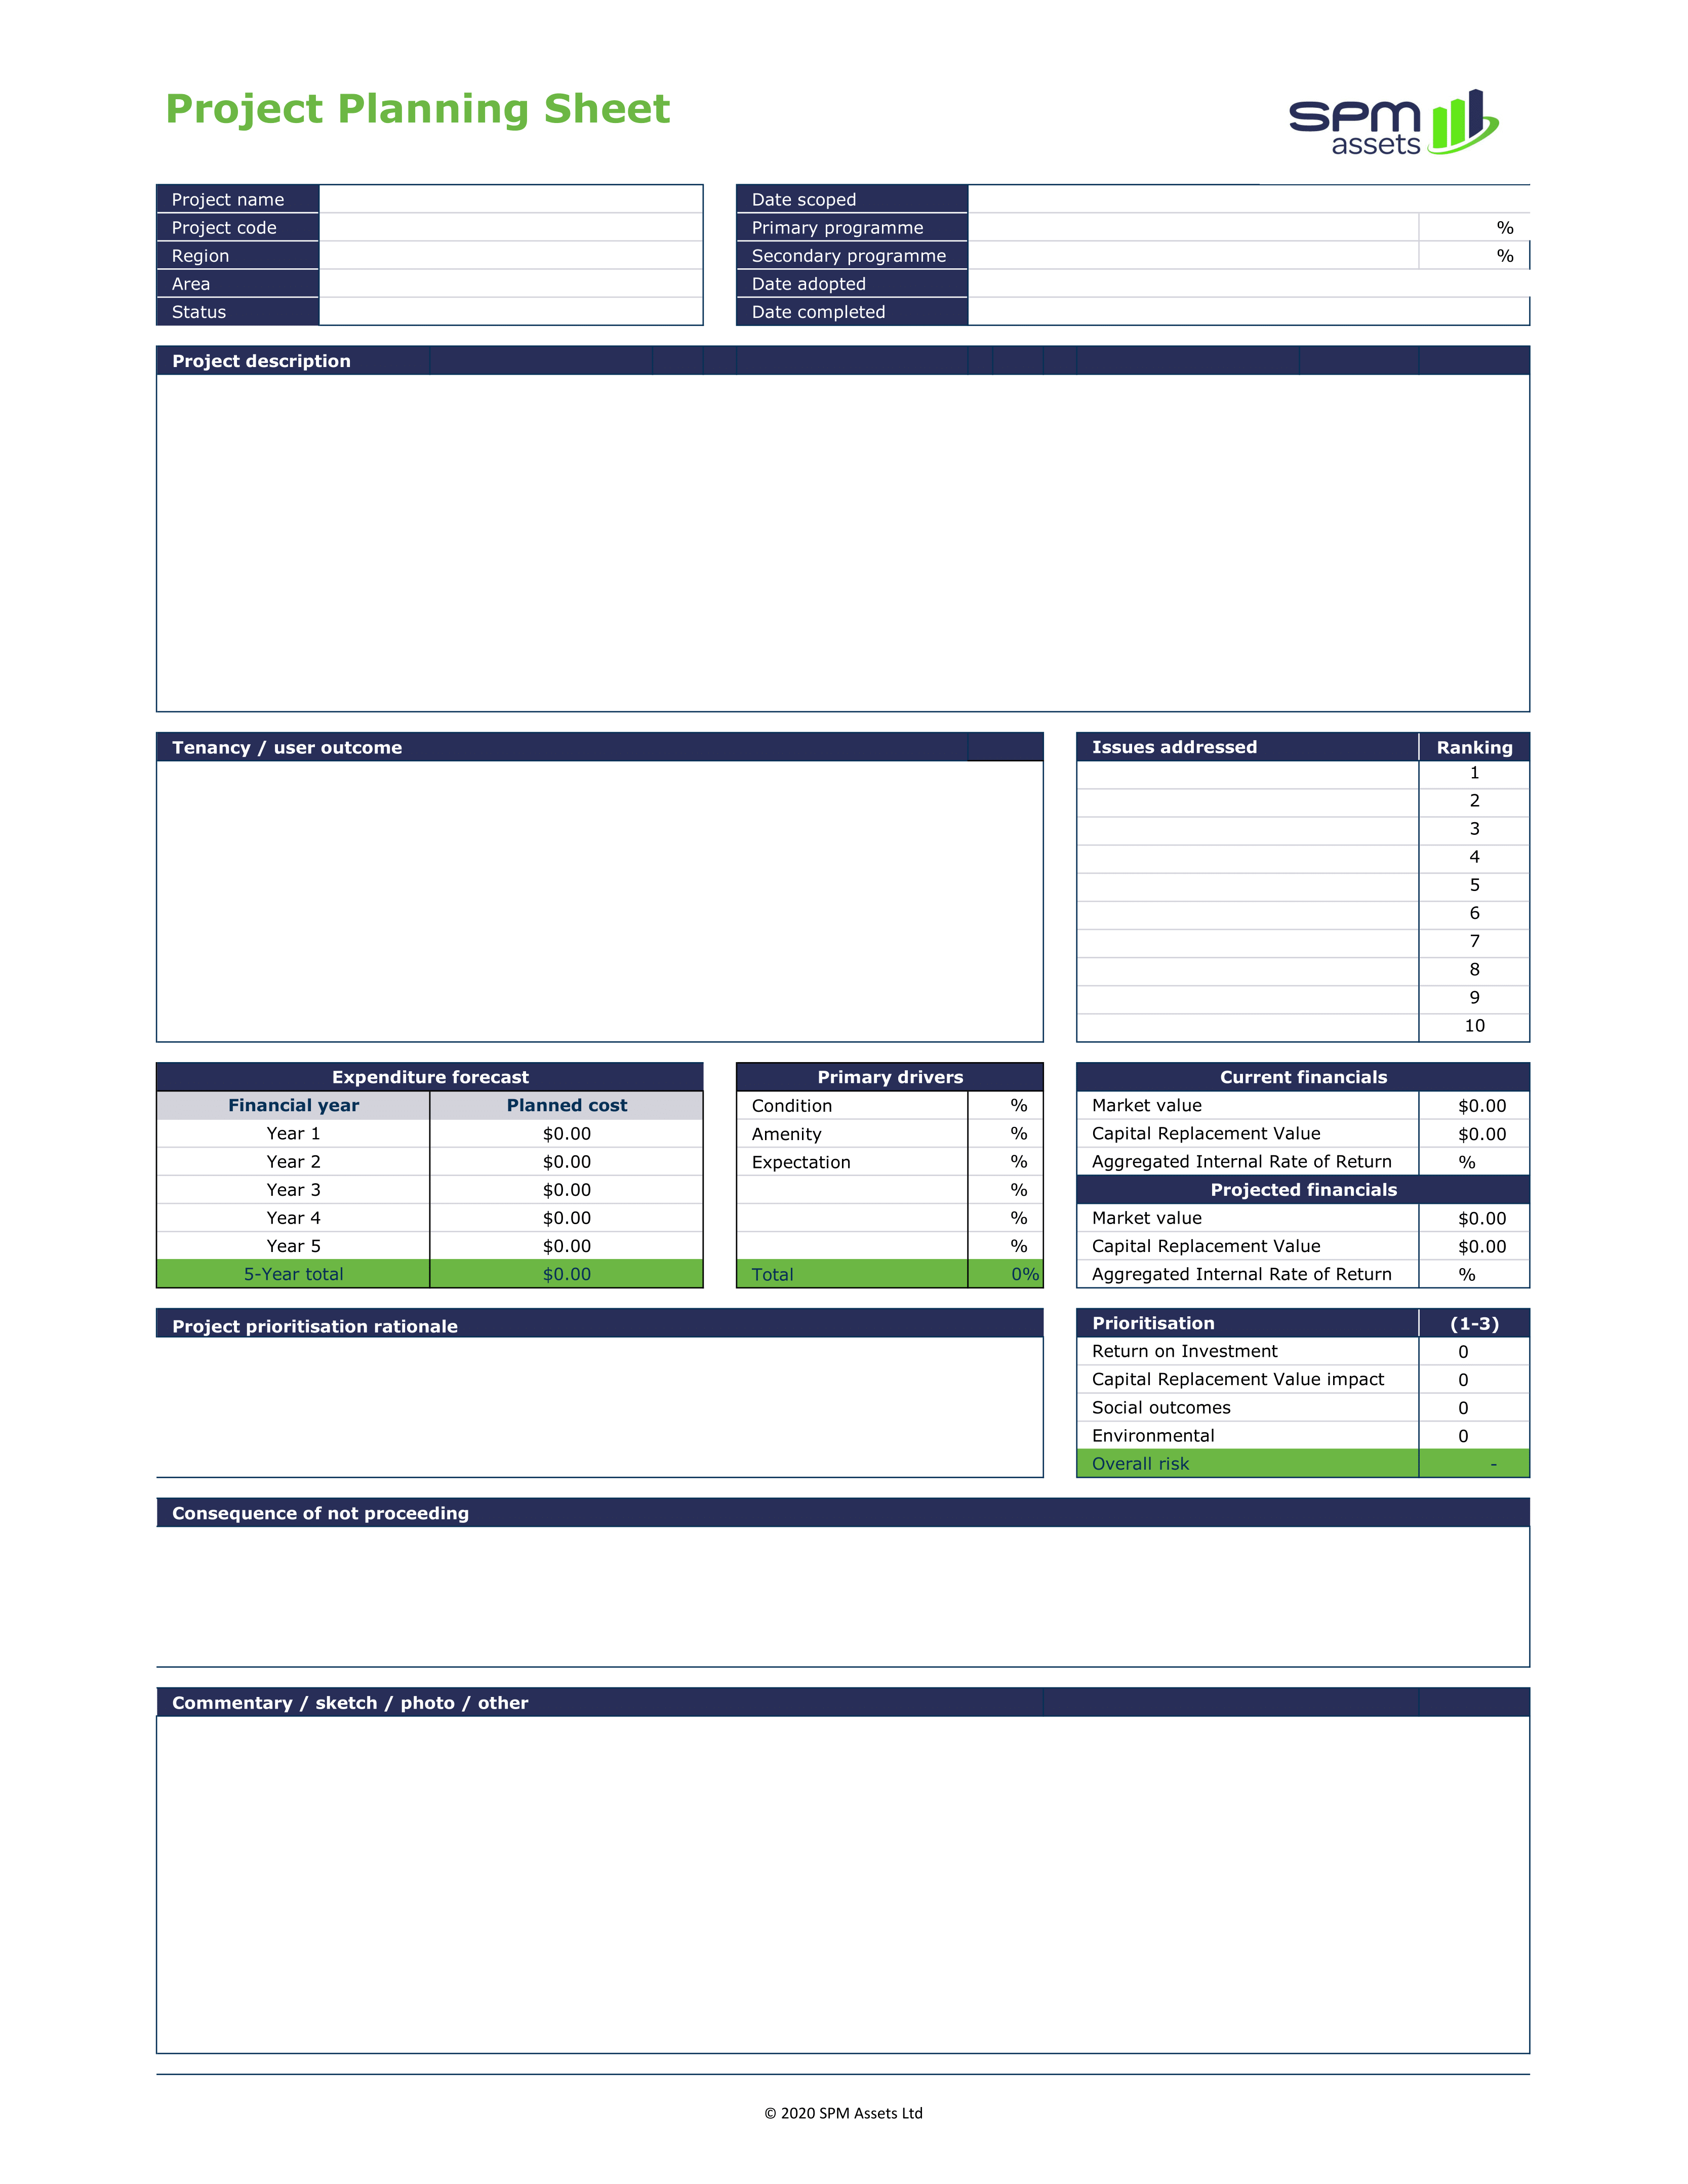 SPM Assets - Project Planning Sheet (1)-1-2